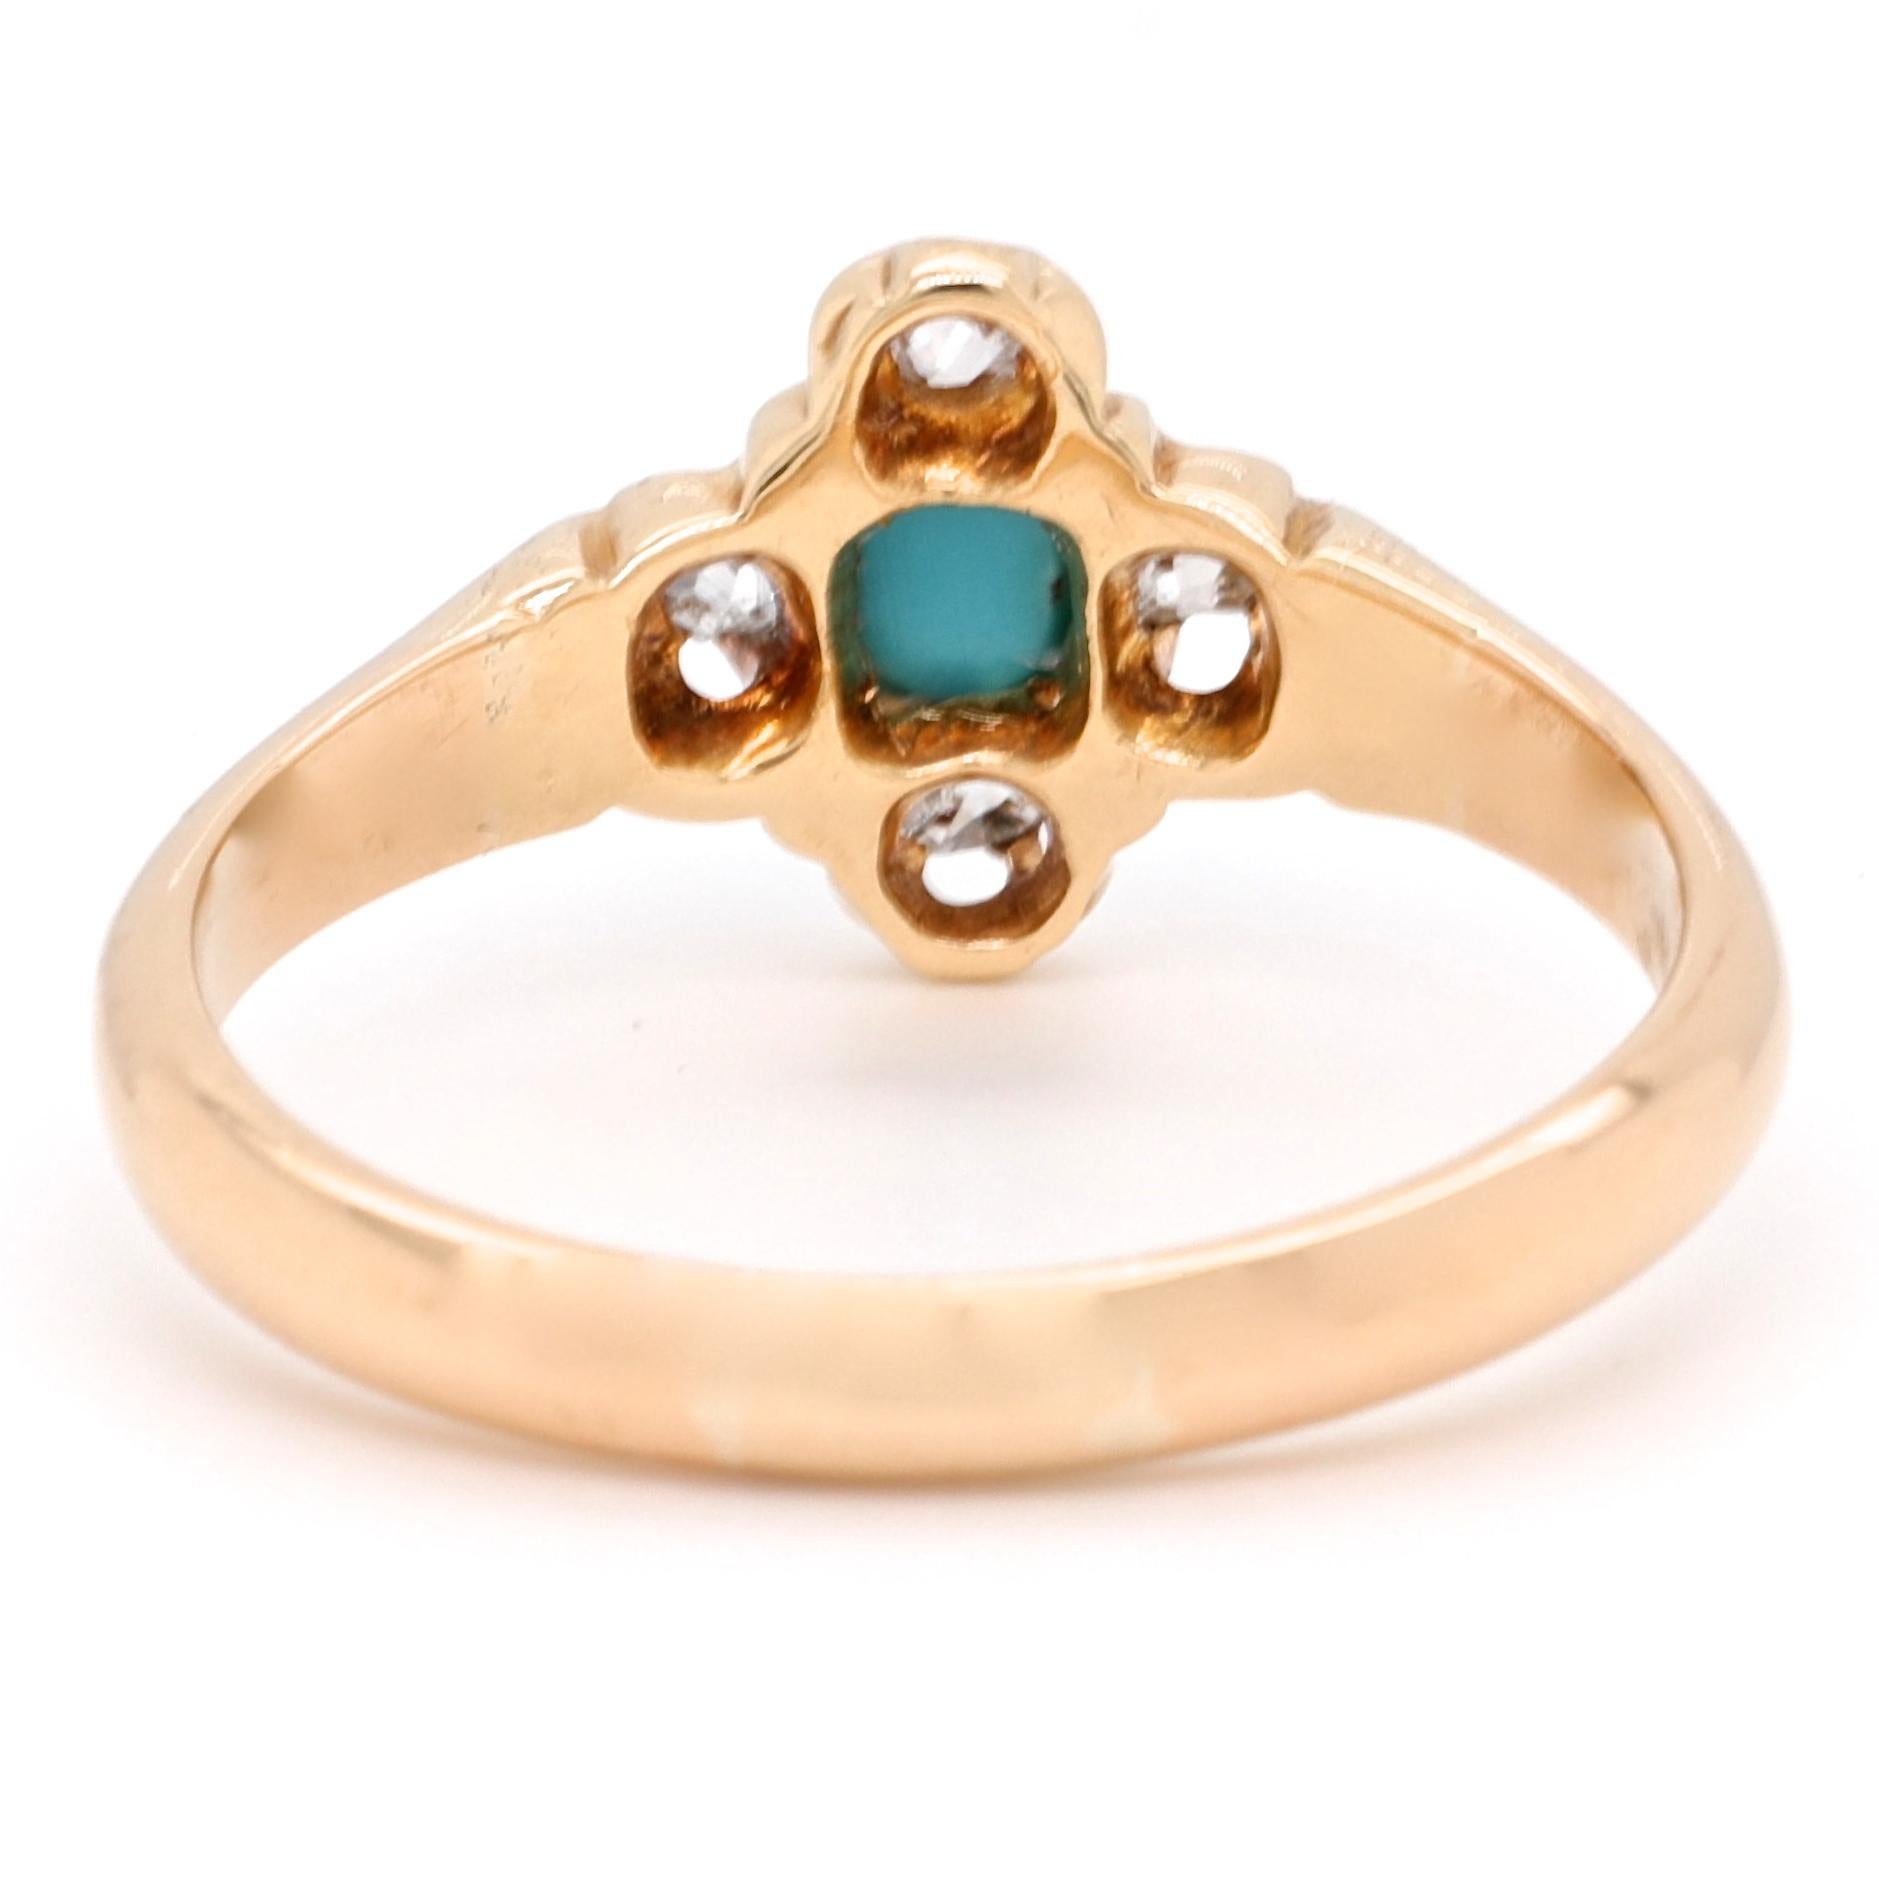 Cabochon Victorian Revival Turquoise Diamond 14 Karat Gold Ring